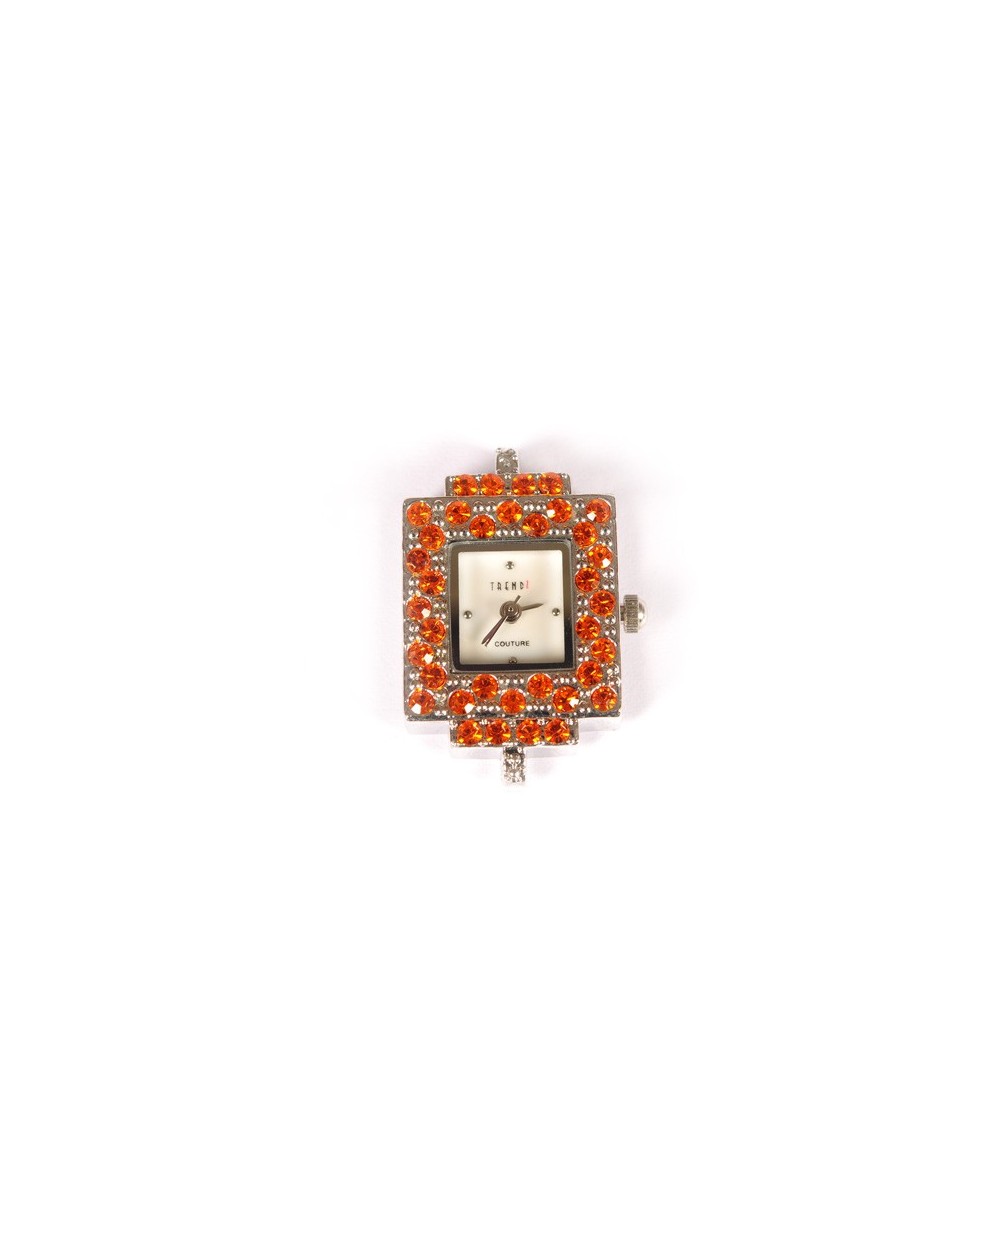 Laikrodis su swarovski kristalais orange, 1 vnt.